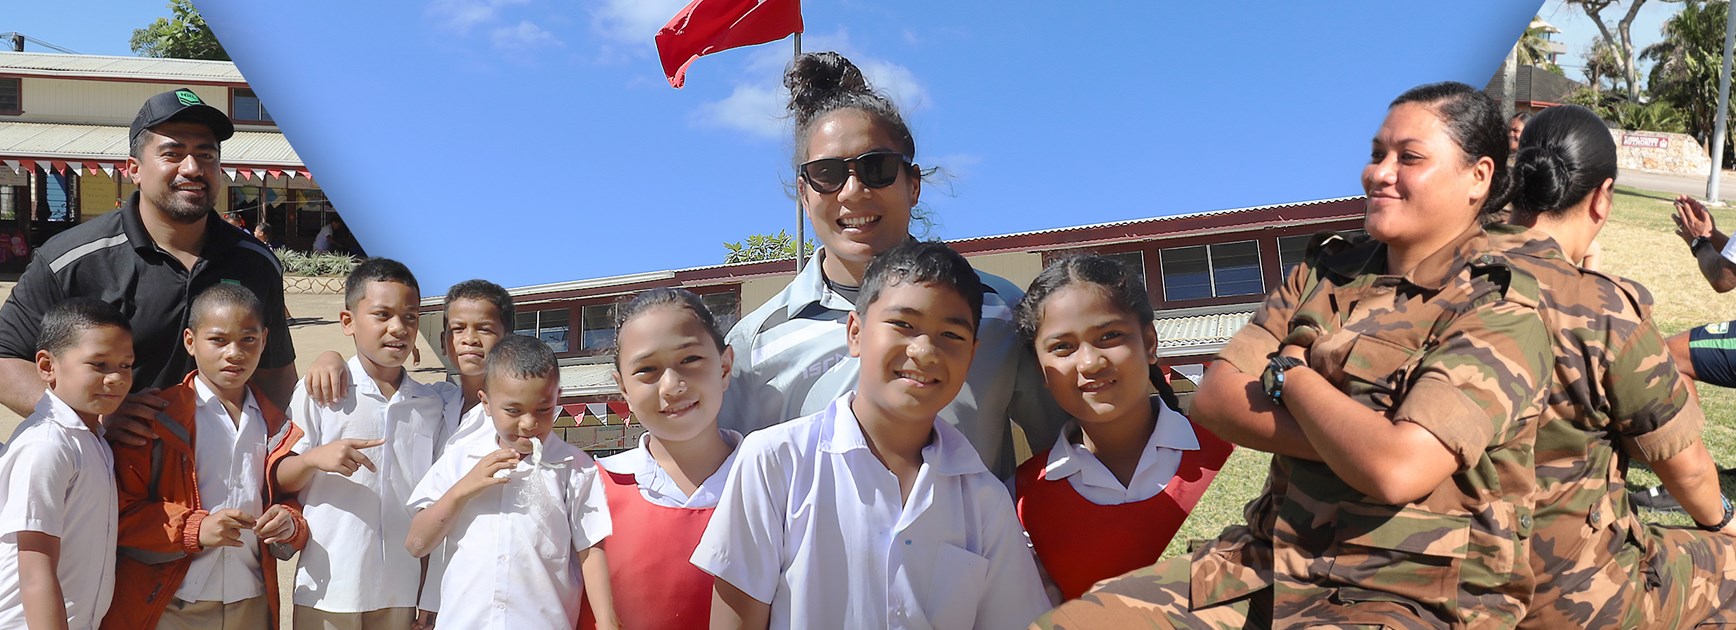 Simaima Taufa making her voice heard in anti-violence campaign in Tonga